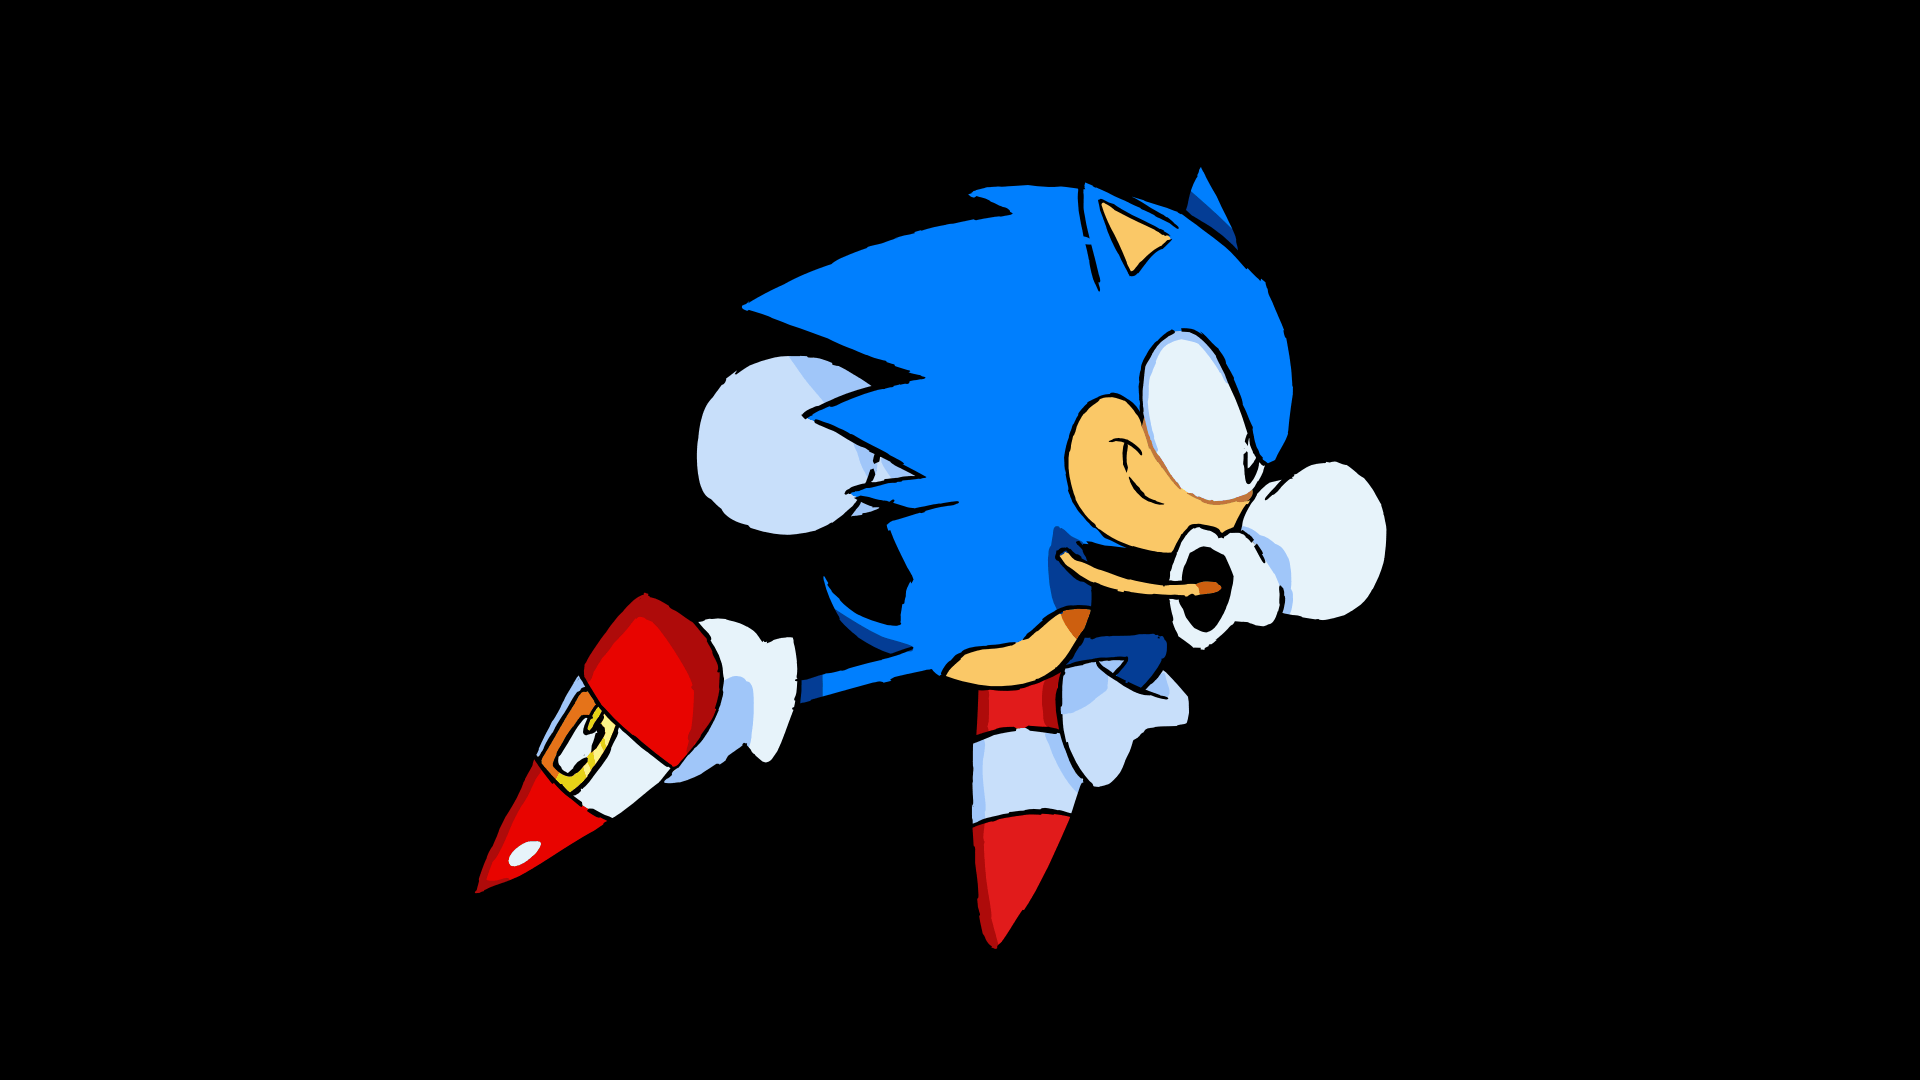 Nova go sonic. Sonic Mania gamejolt. Sonic x gotta go fast. Sonic Mania Adventures. Sonic Mania Sonic.